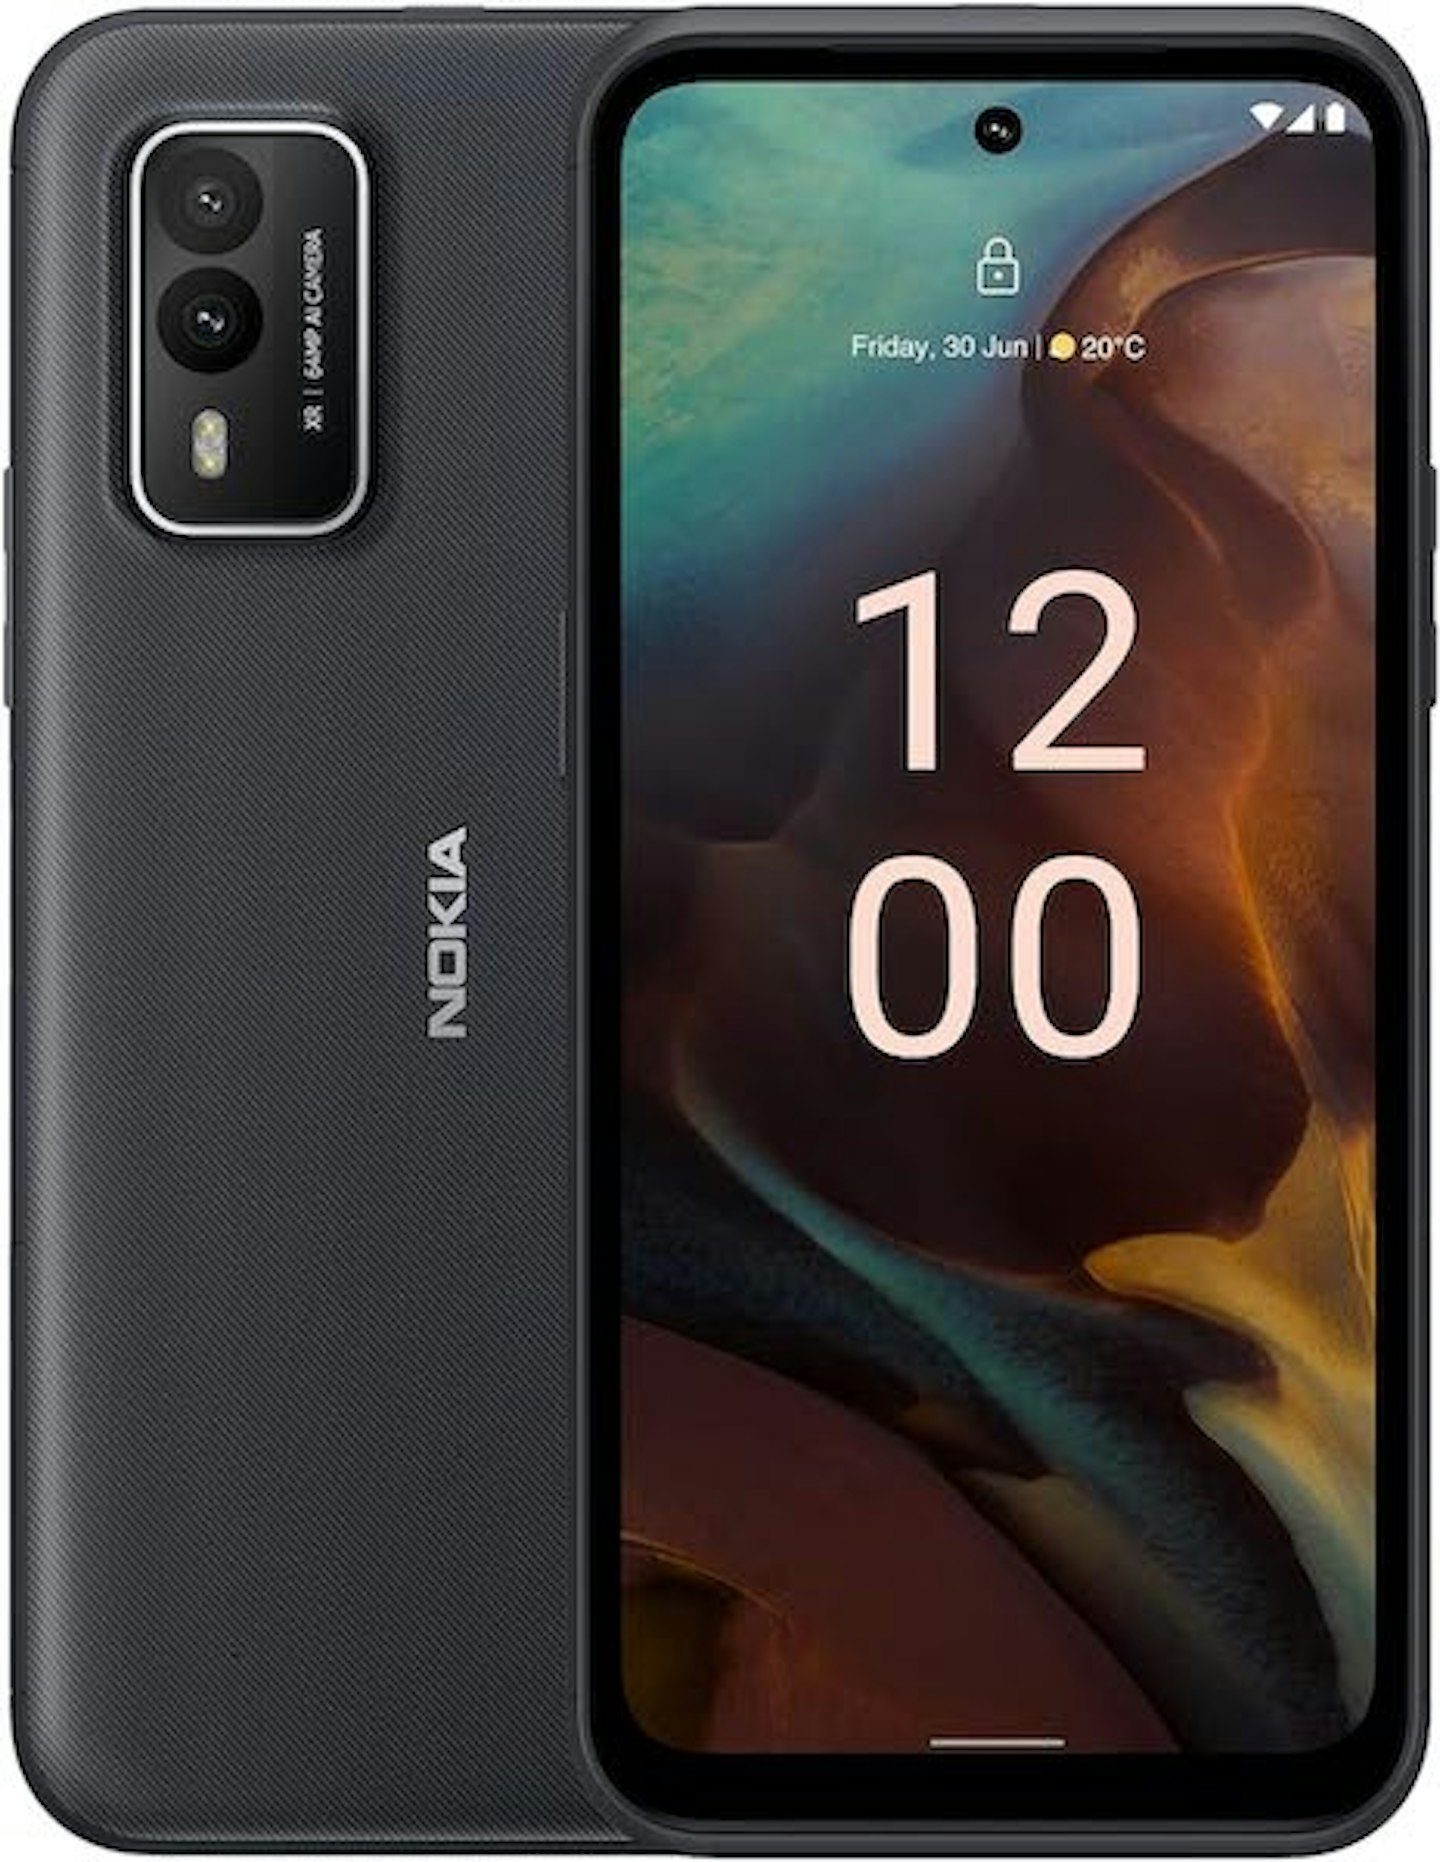 Nokia XR21 5G 6.49” Smartphone